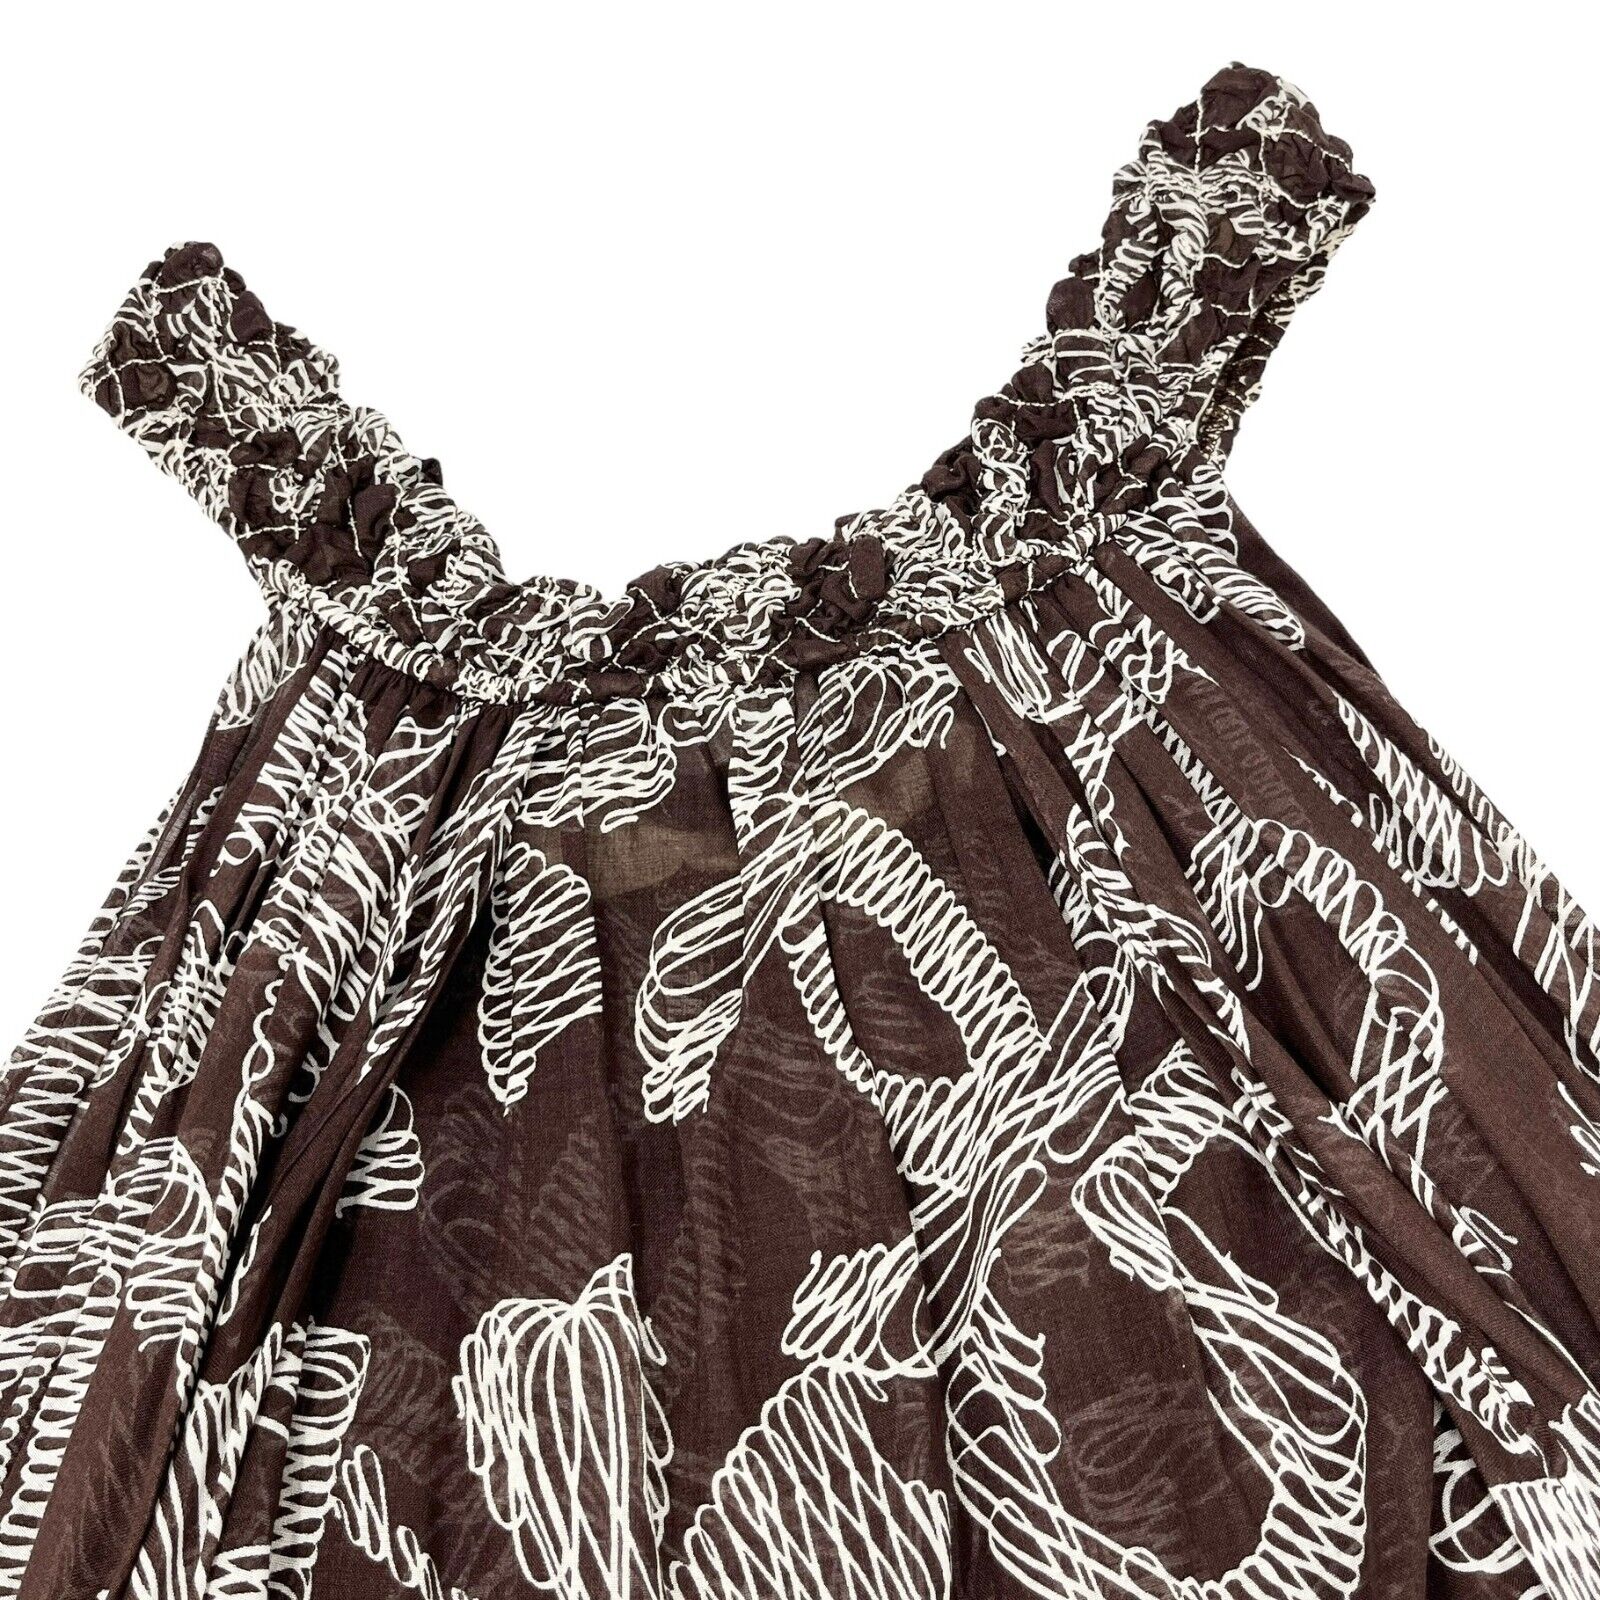 CHANEL Vintage 08P CC Mark Dress #42 One-piece See-through Brown Rank AB+